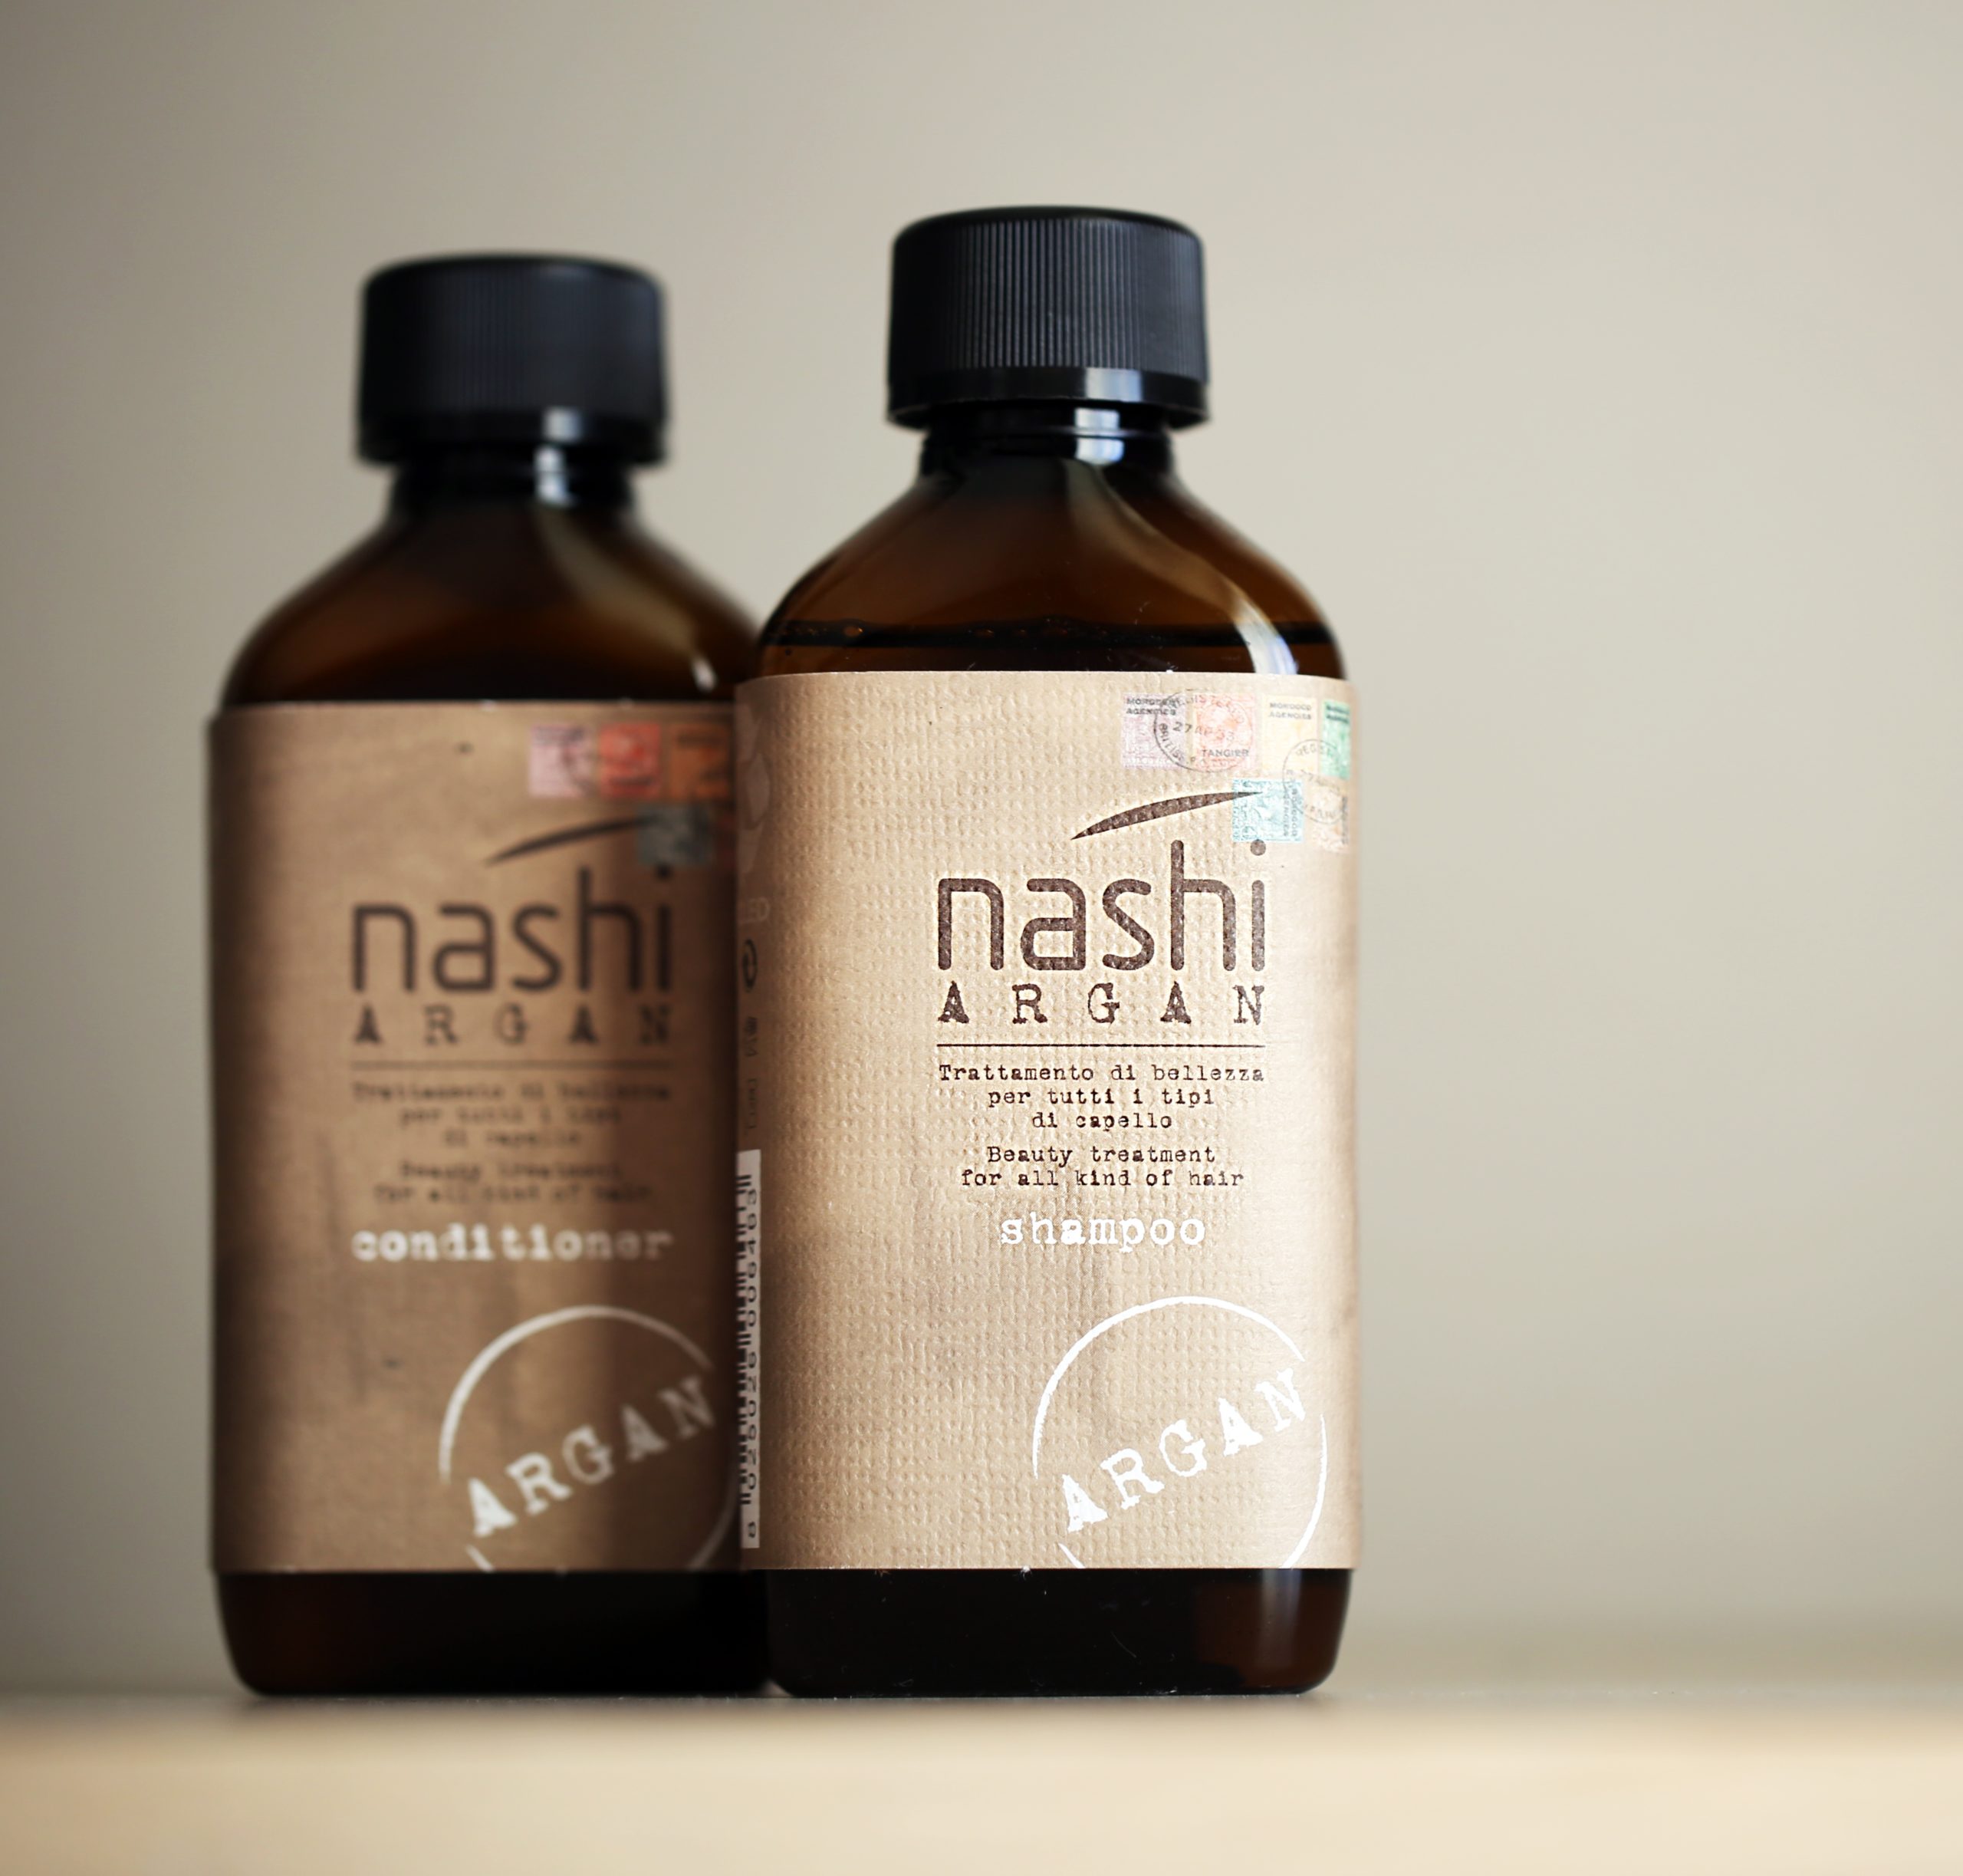 Nashi - Argan Oil - Reviews